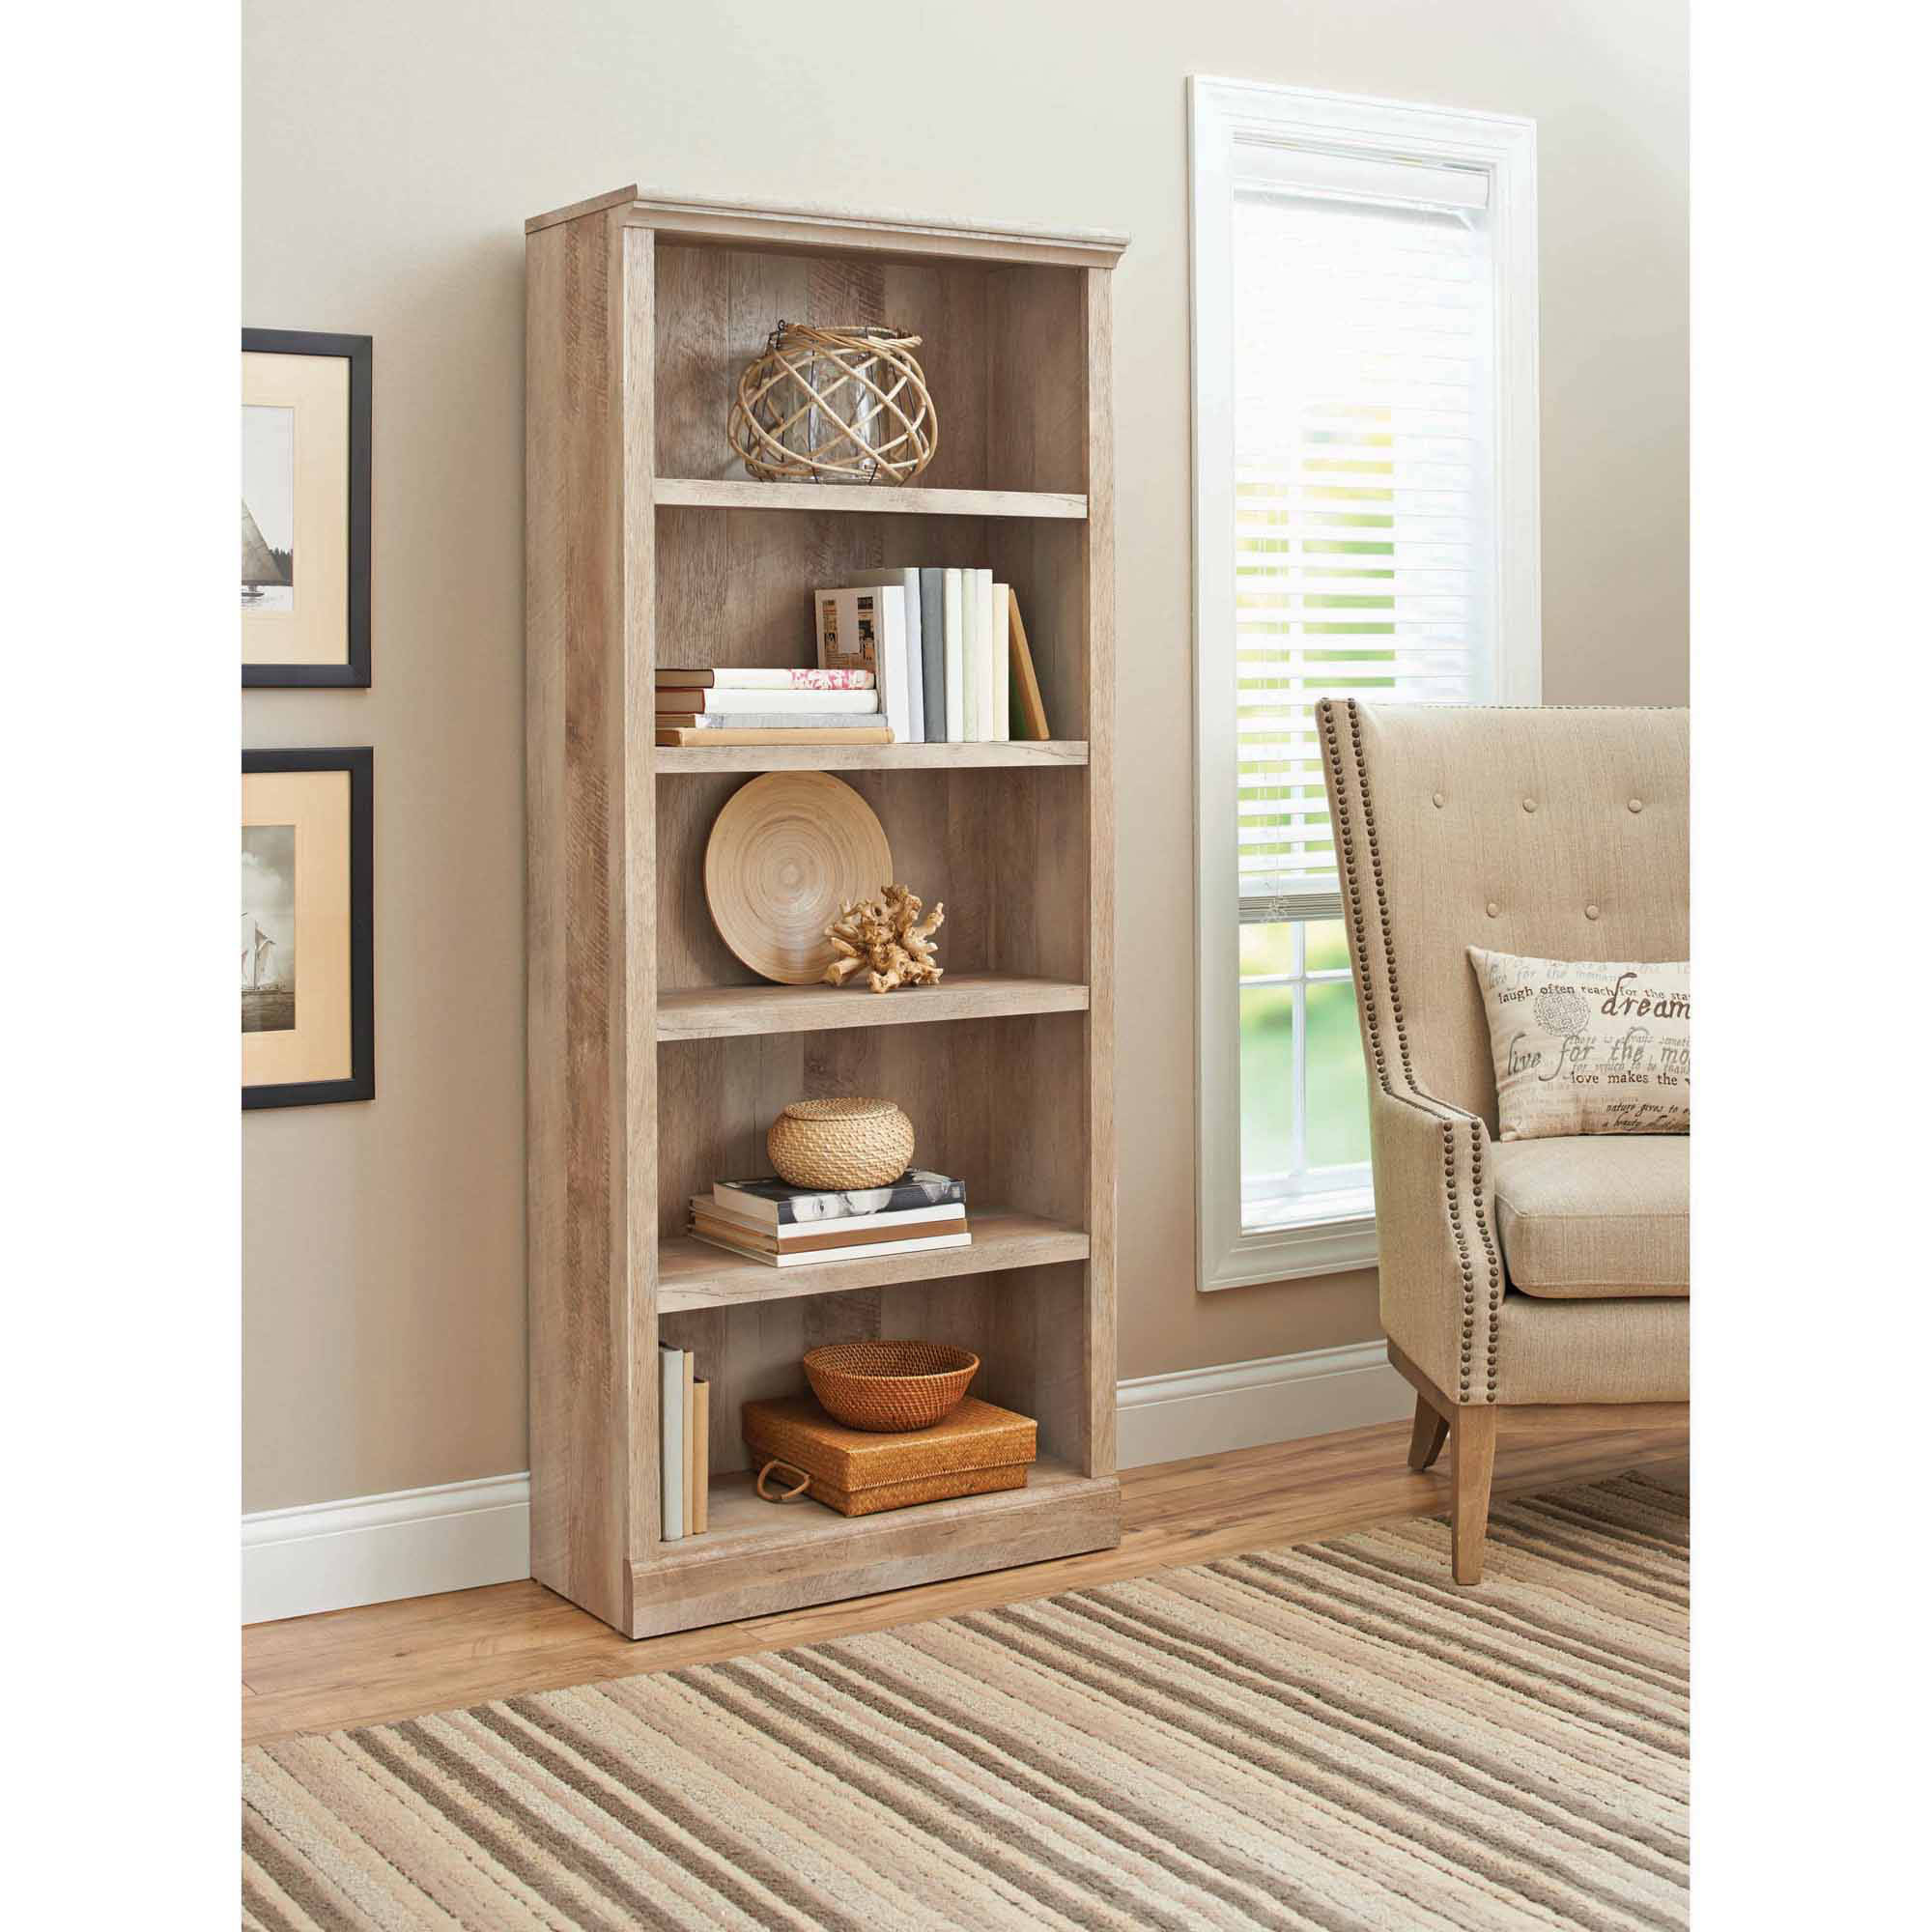 Details About 5 Shelves Wood Bookcase Adjustable Rustic Shelf Storage Tall Country Bookshelf regarding size 2000 X 2000